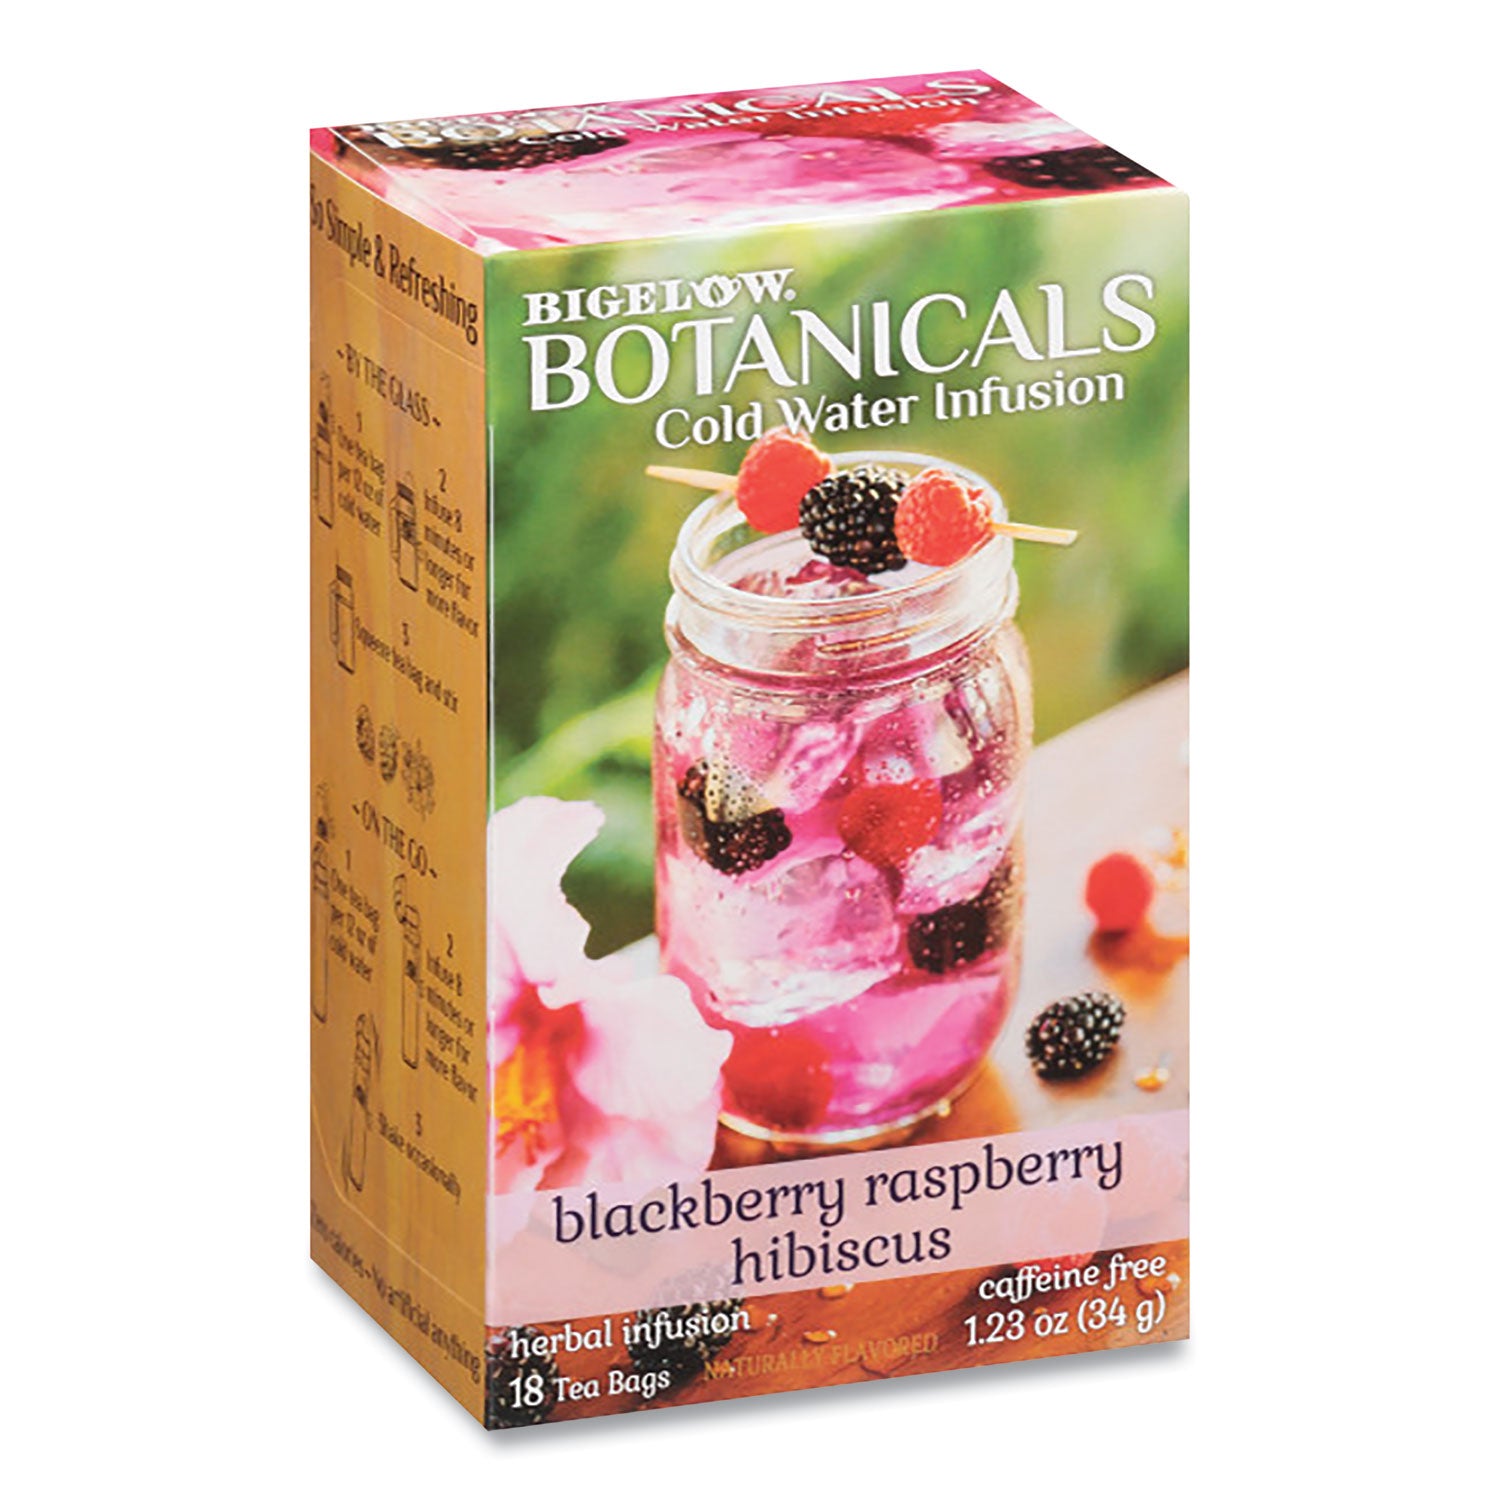 botanicals-blackberry-raspberry-hibiscus-cold-water-herbal-infusion-07-oz-tea-bag-18-box_btc39000 - 1